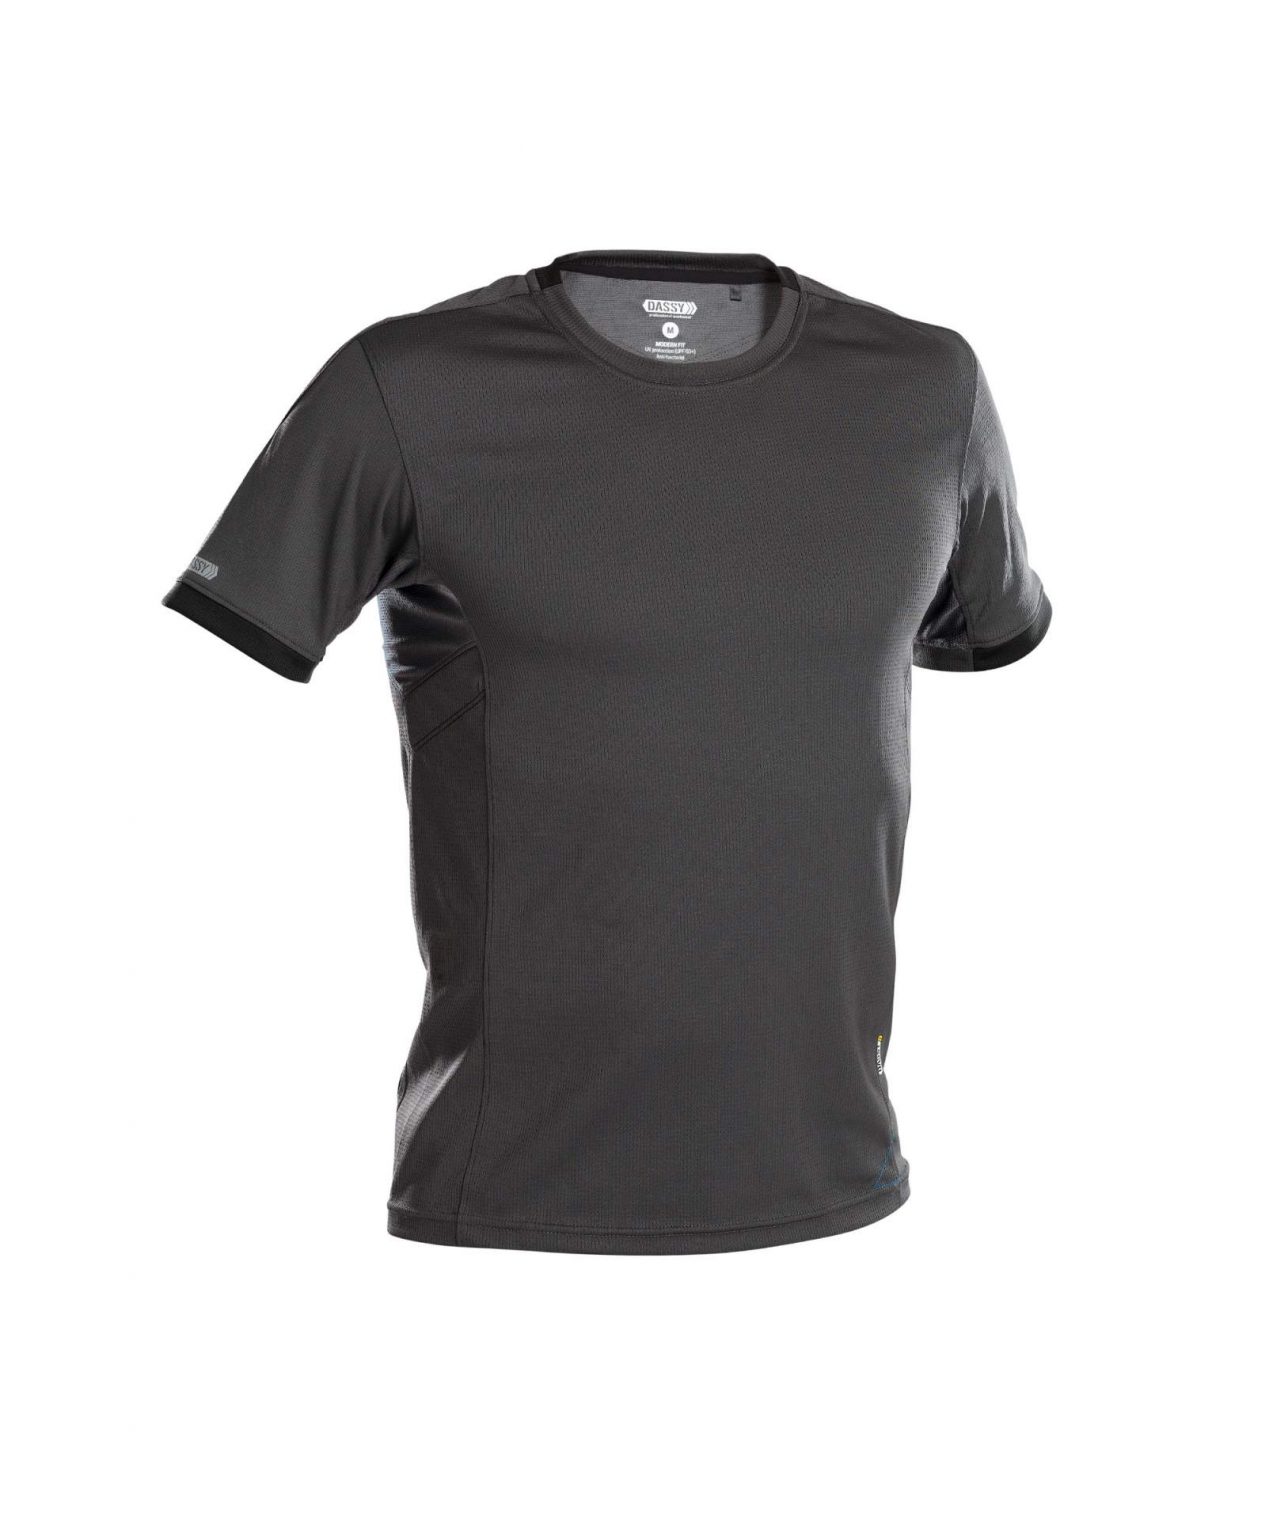 nexus t shirt anthracite grey black front